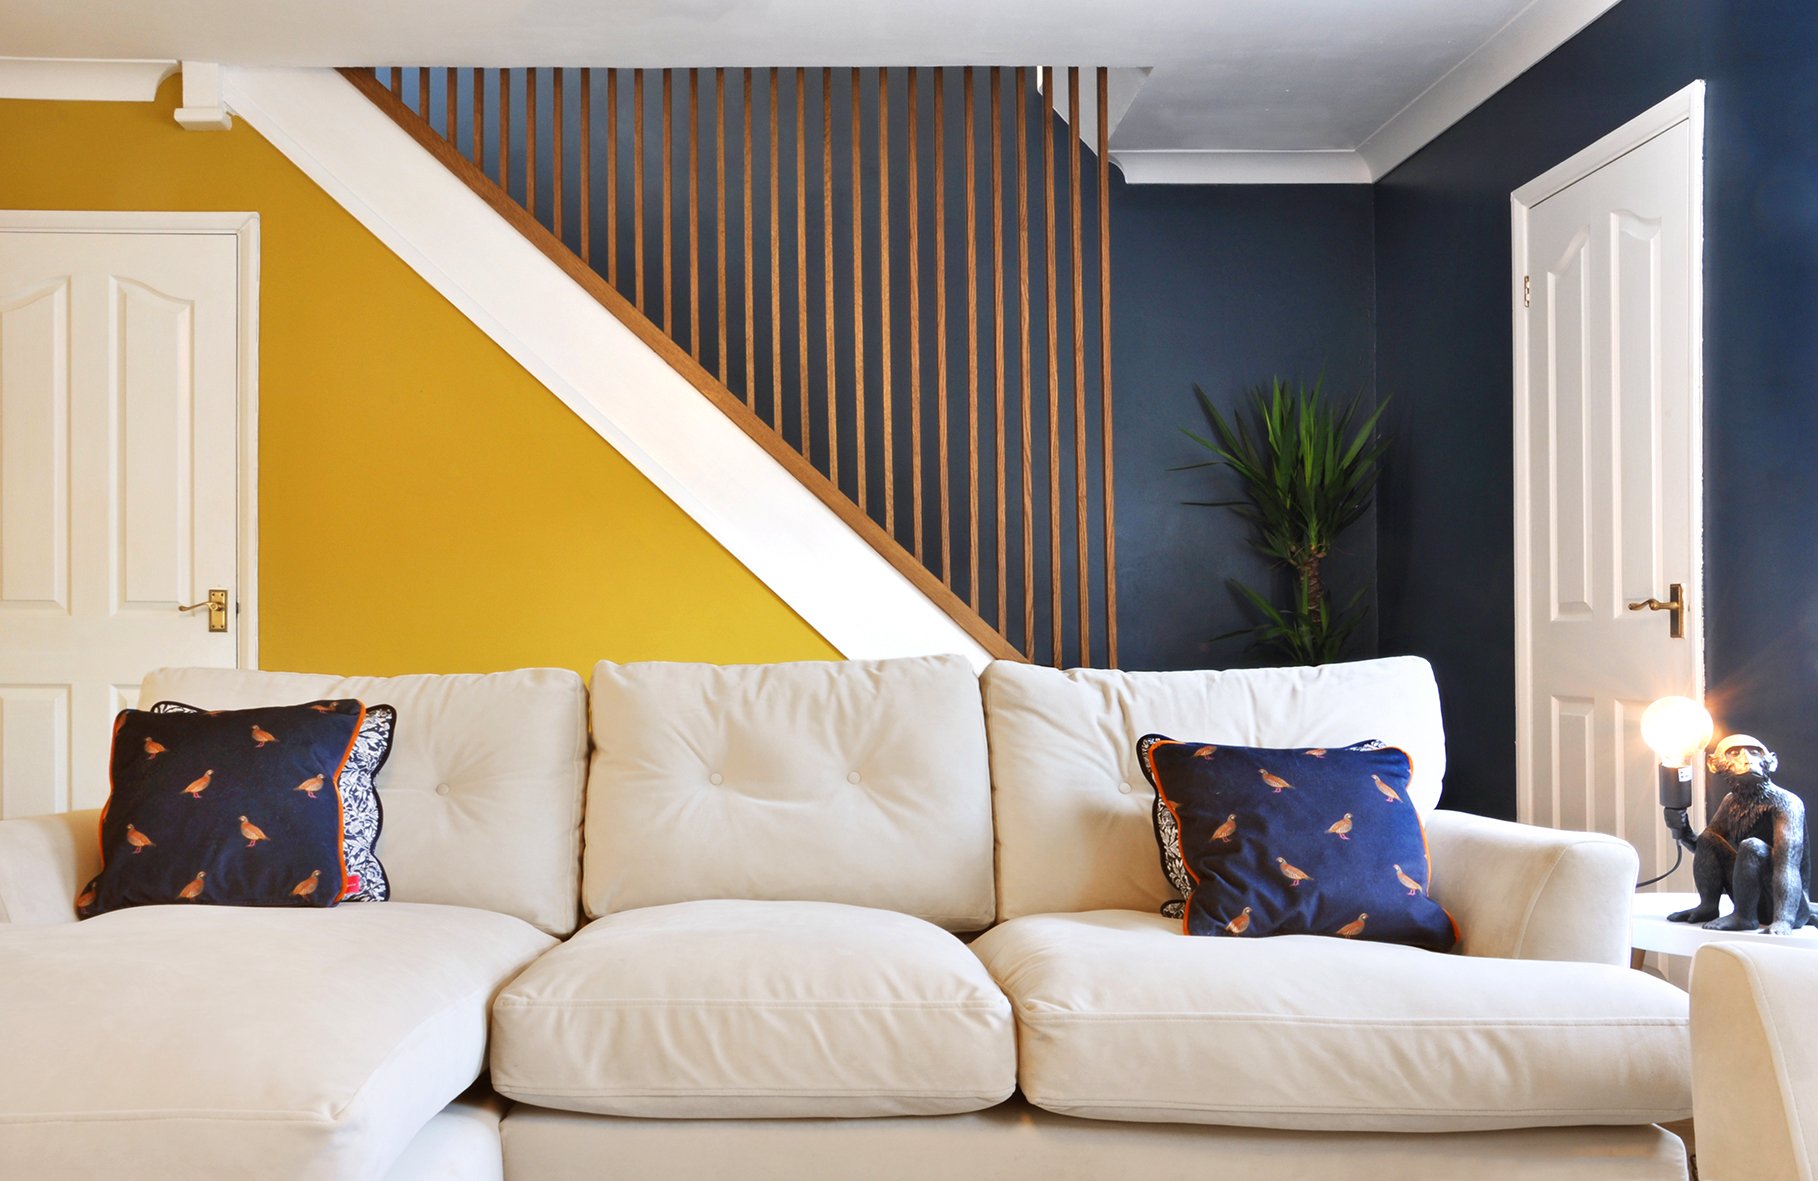 CharlotteBucciero-interiors-livingroom-design-cream-sofa-navy-yellow-colourblocking.jpg